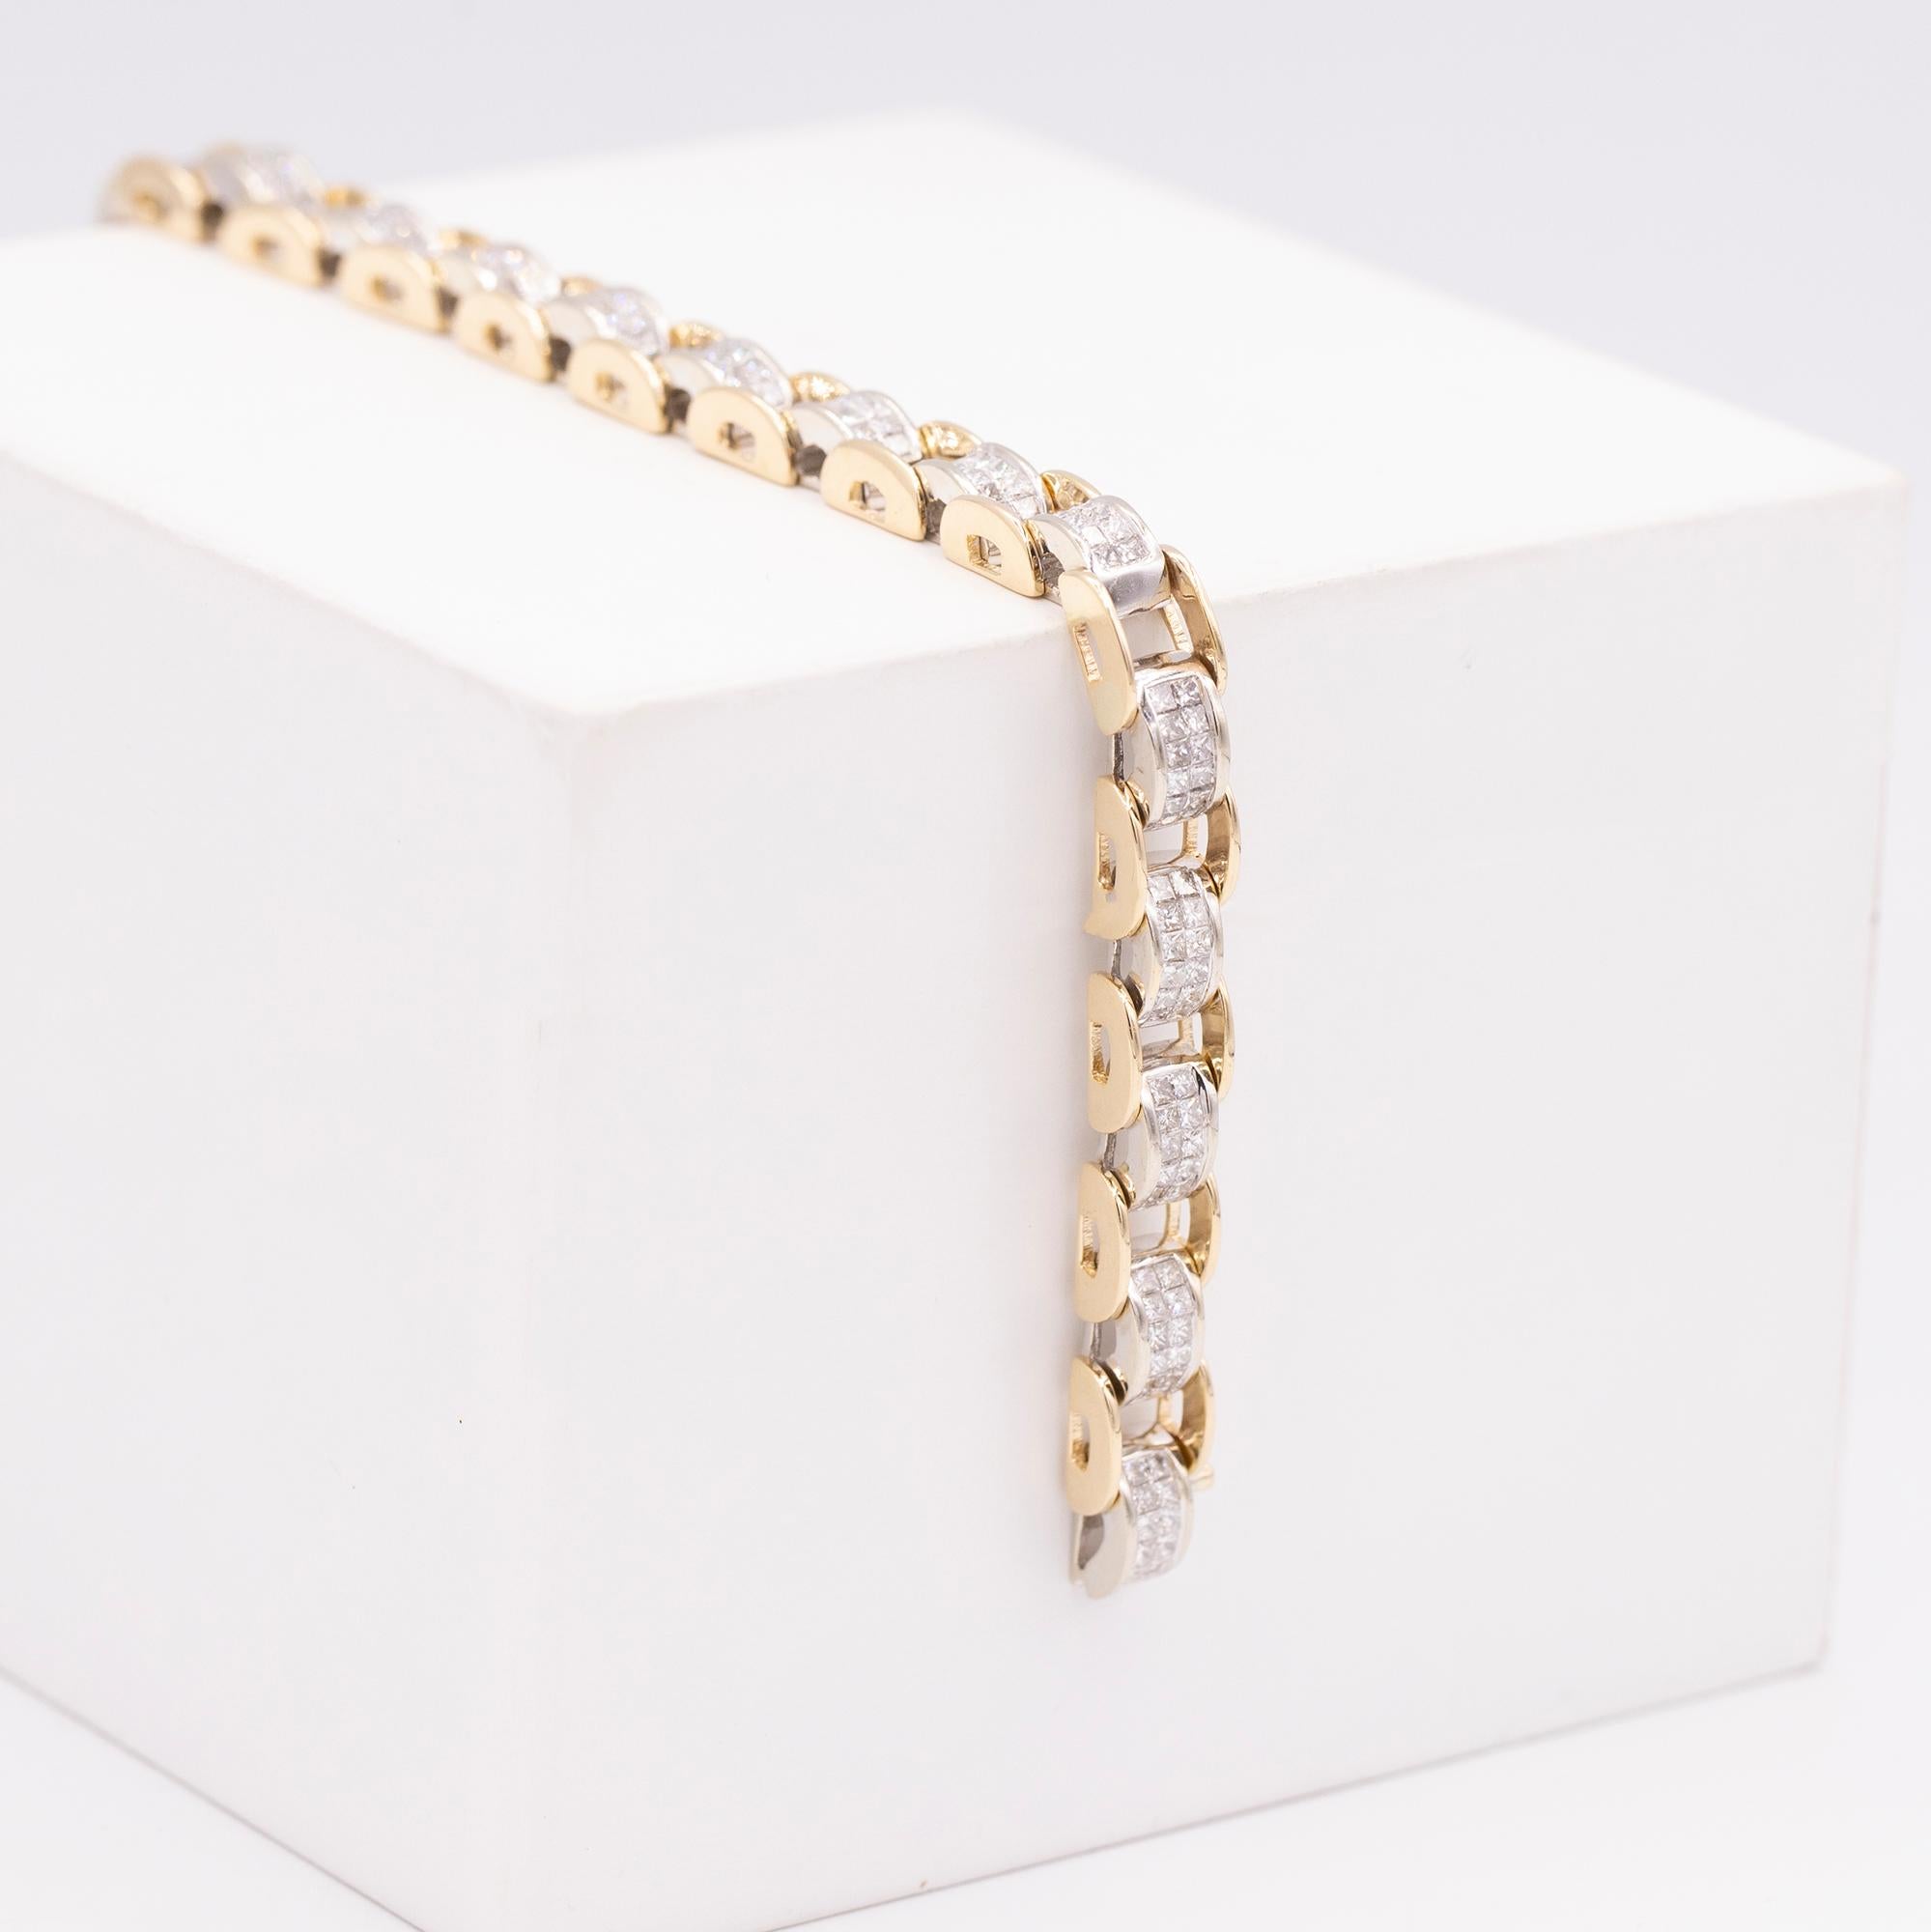 14 karat yellow gold & white gold diamond bracelet with 192 princess cut diamonds. The bracelet measures at 7.25